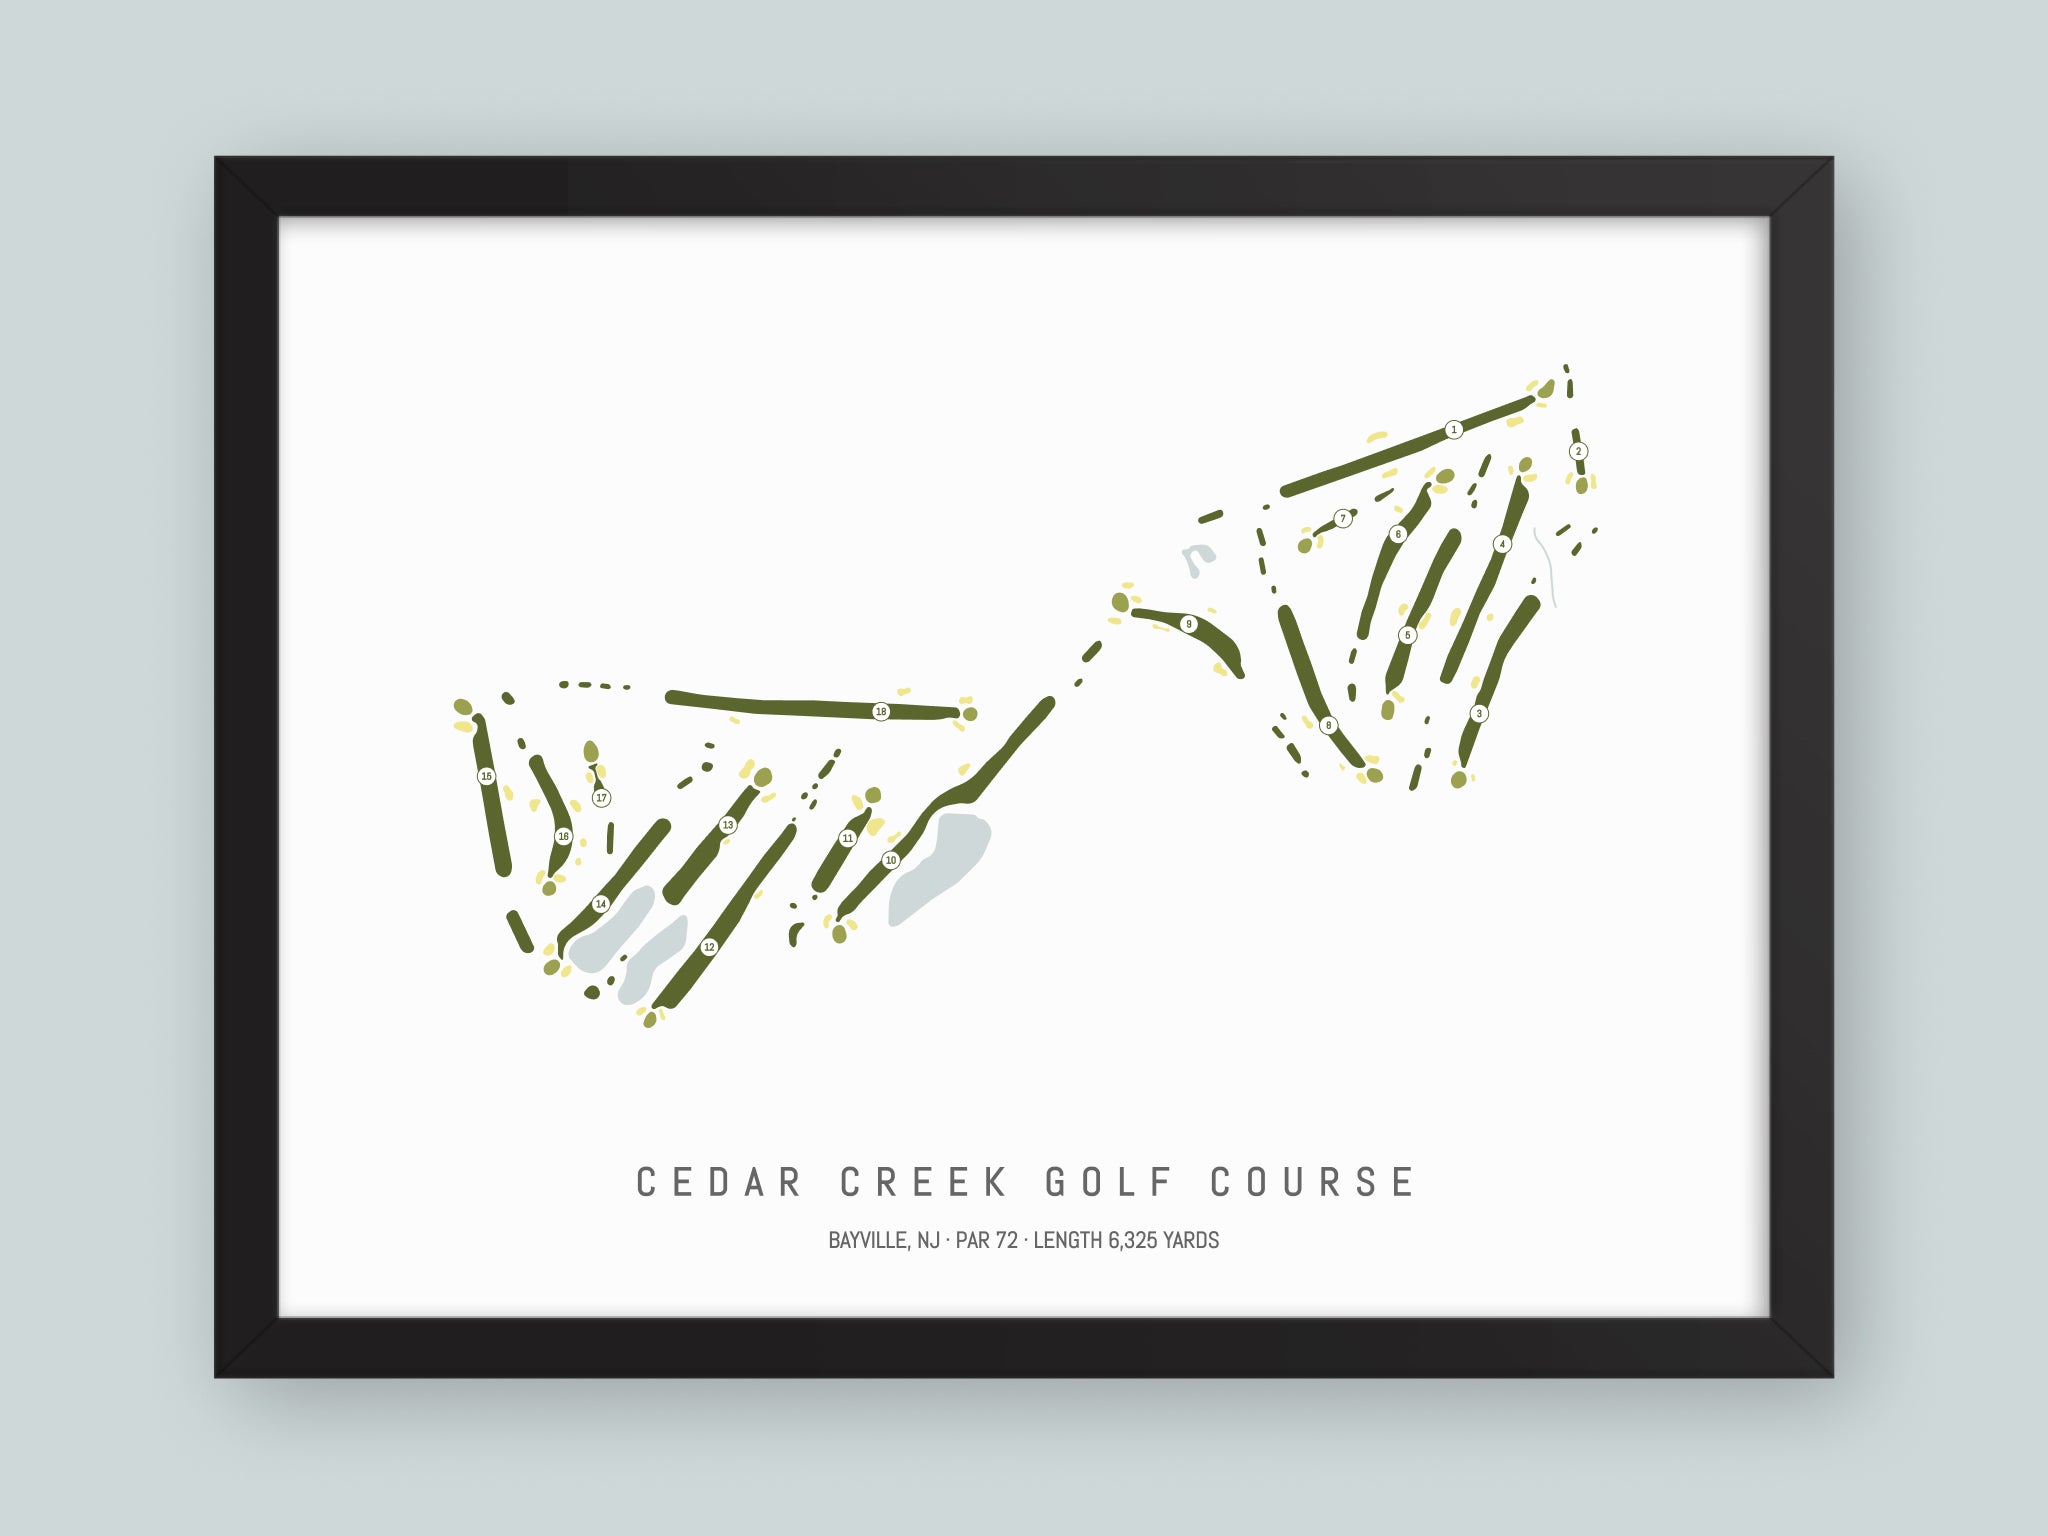 Cedar-Creek-Golf-Course-NJ--Black-Frame-24x18-With-Hole-Numbers